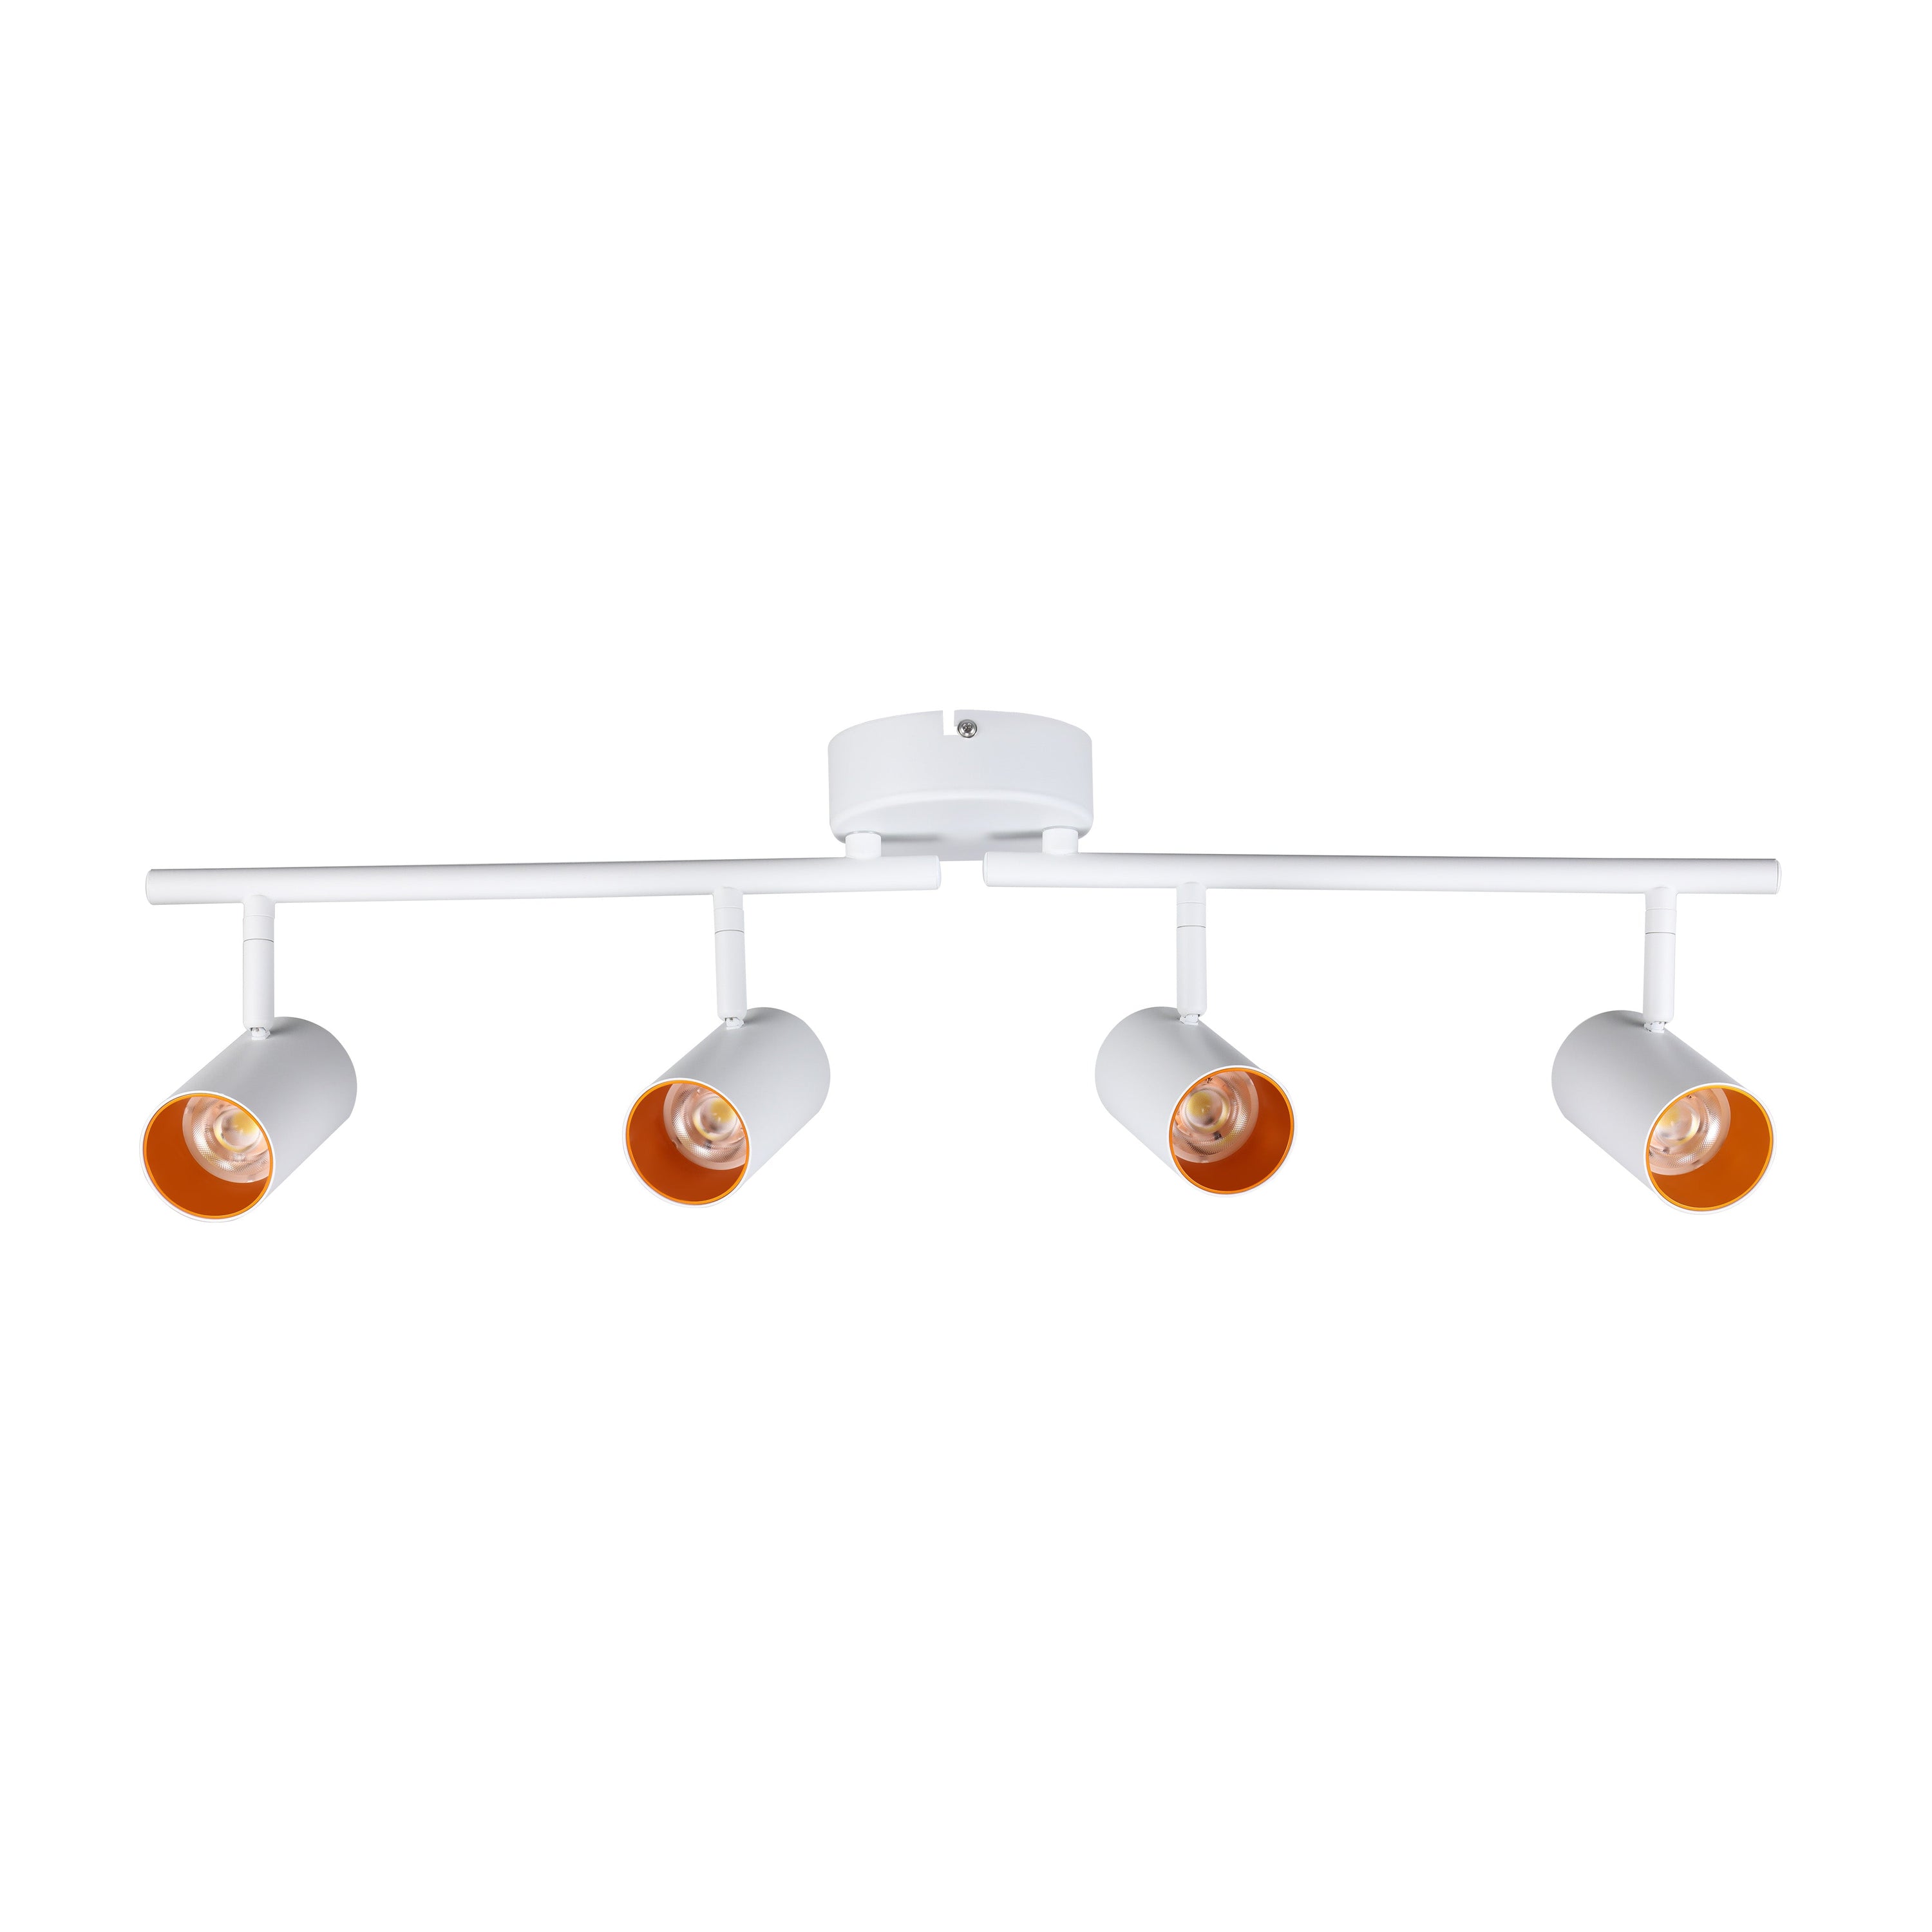 LeonLite theBeam™ Plus 4-Heads LED Ceiling Spot Lights - White - Adjustable CCT